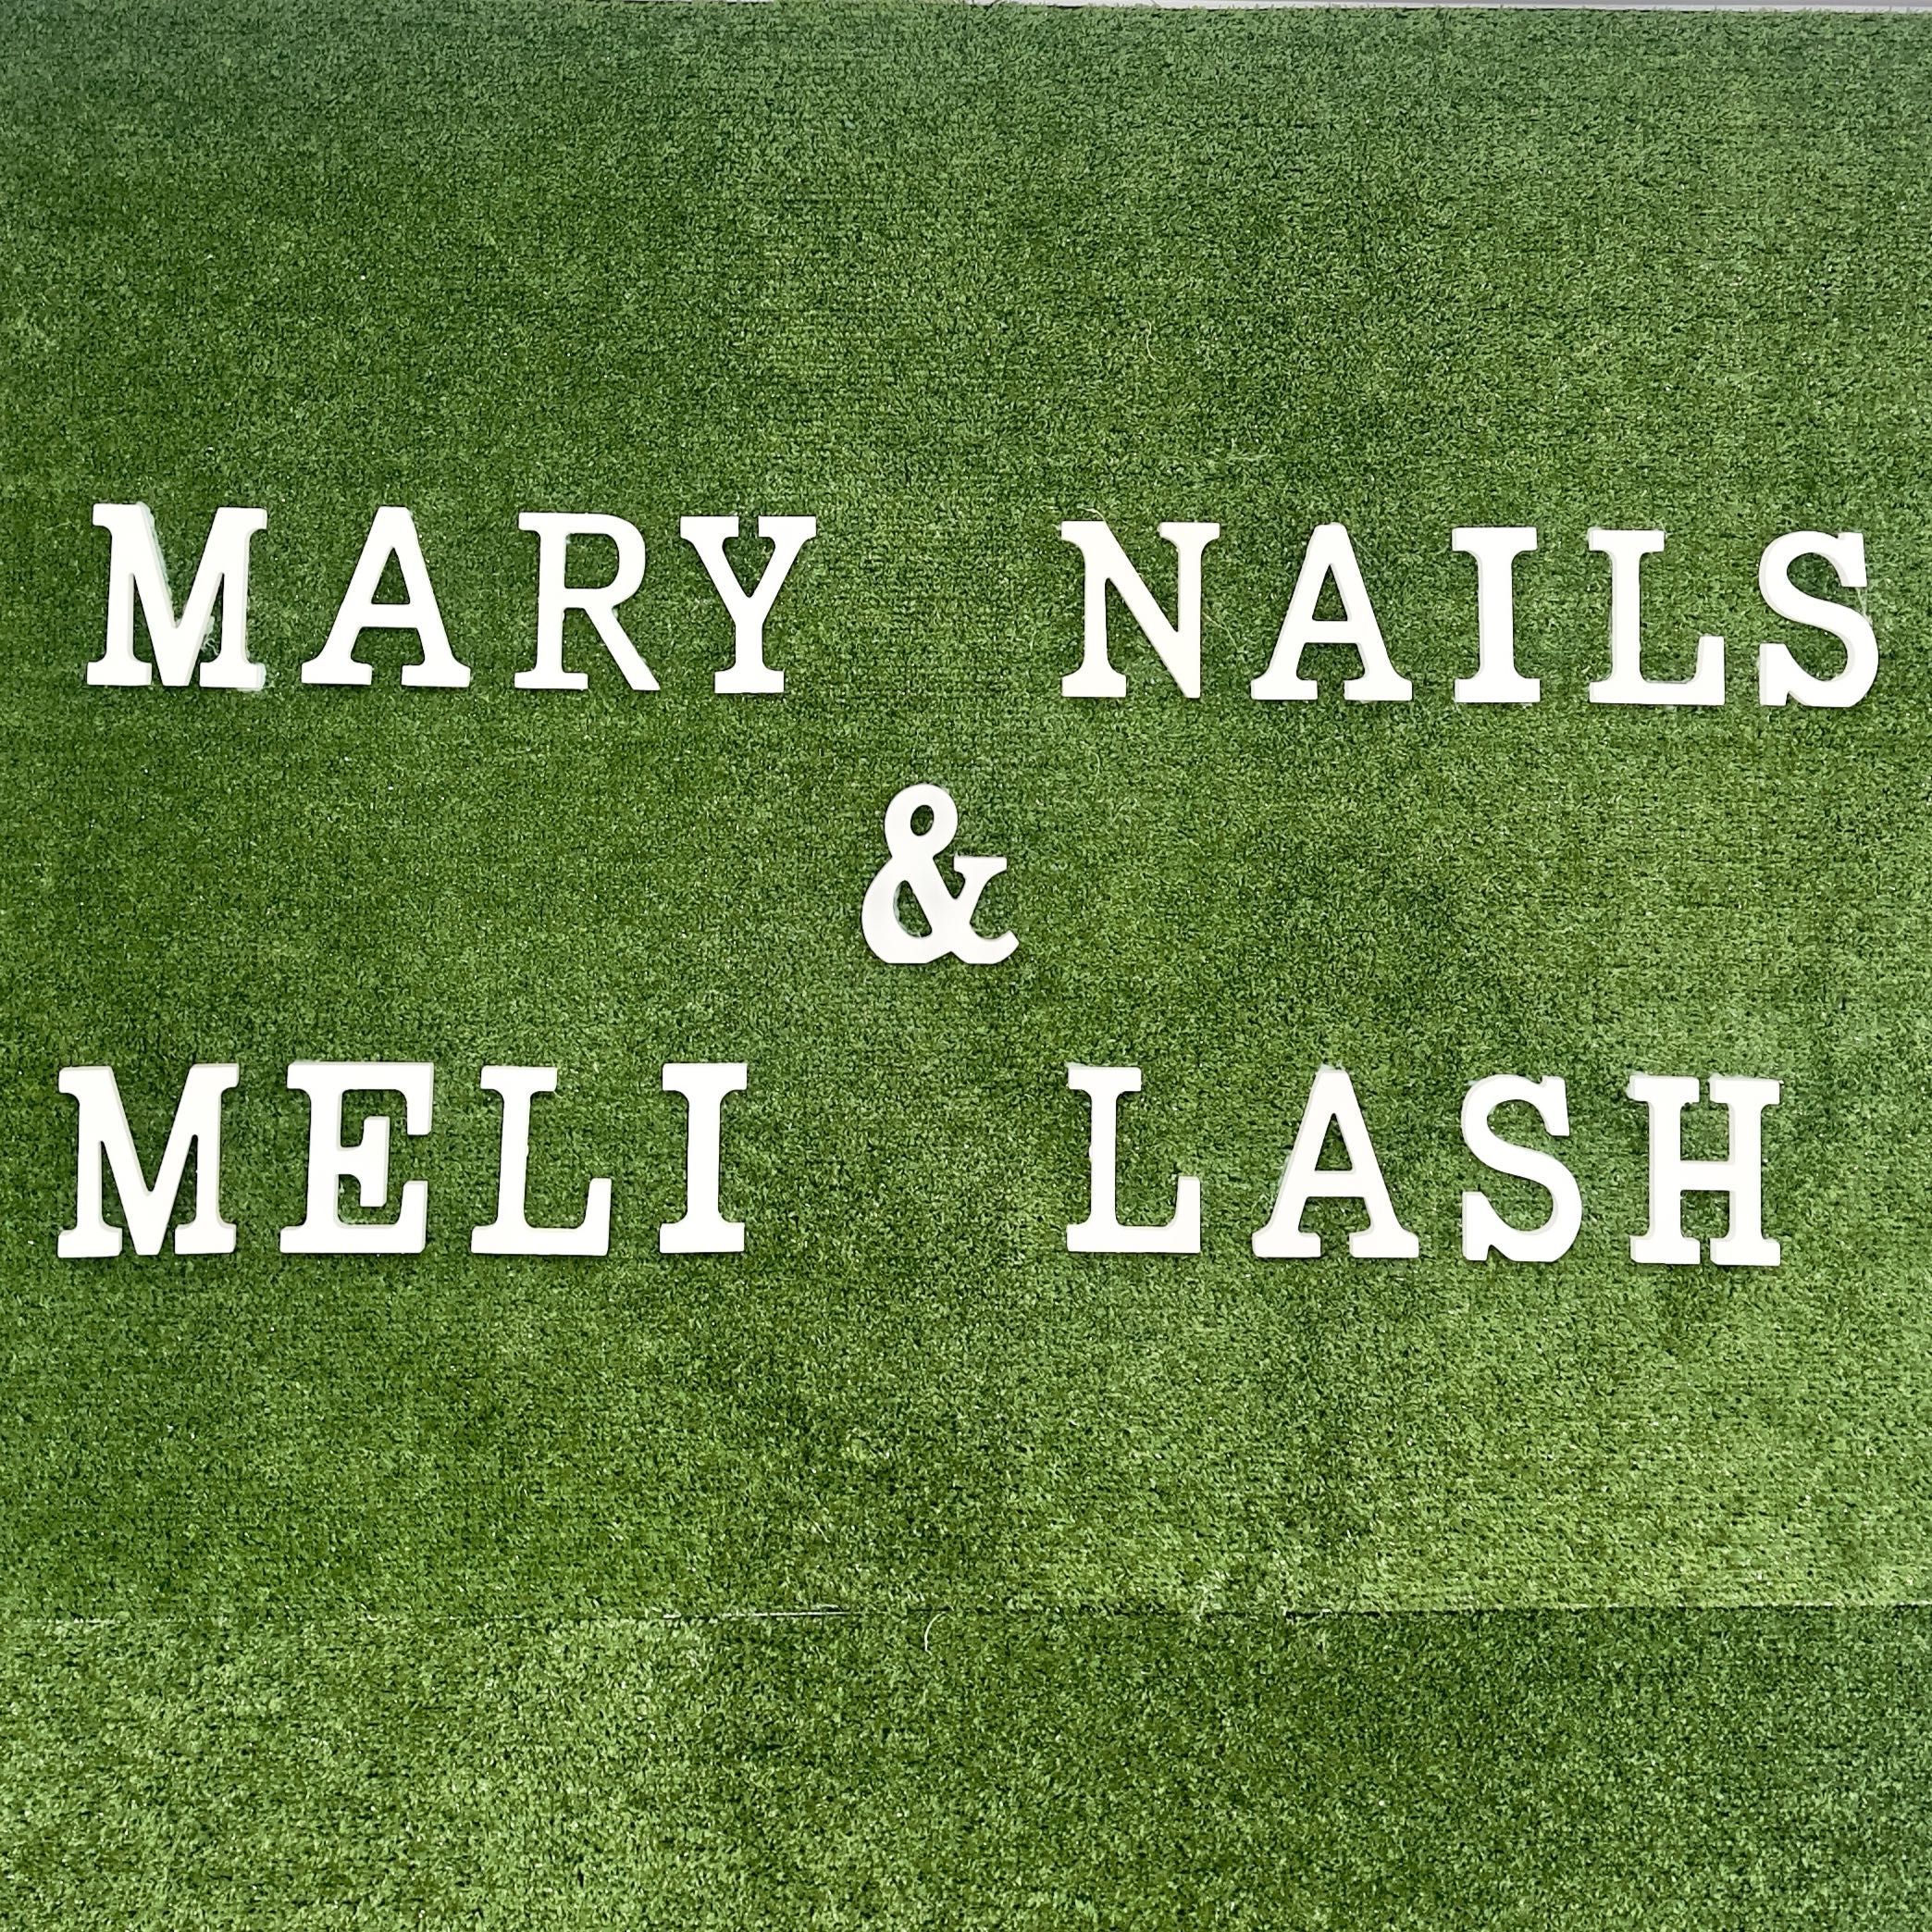 Mary Nails & Meli Lash, Calle Castilla, 59 timbre 2D tercer piso puerta derecha, 35600, Puerto del Rosario